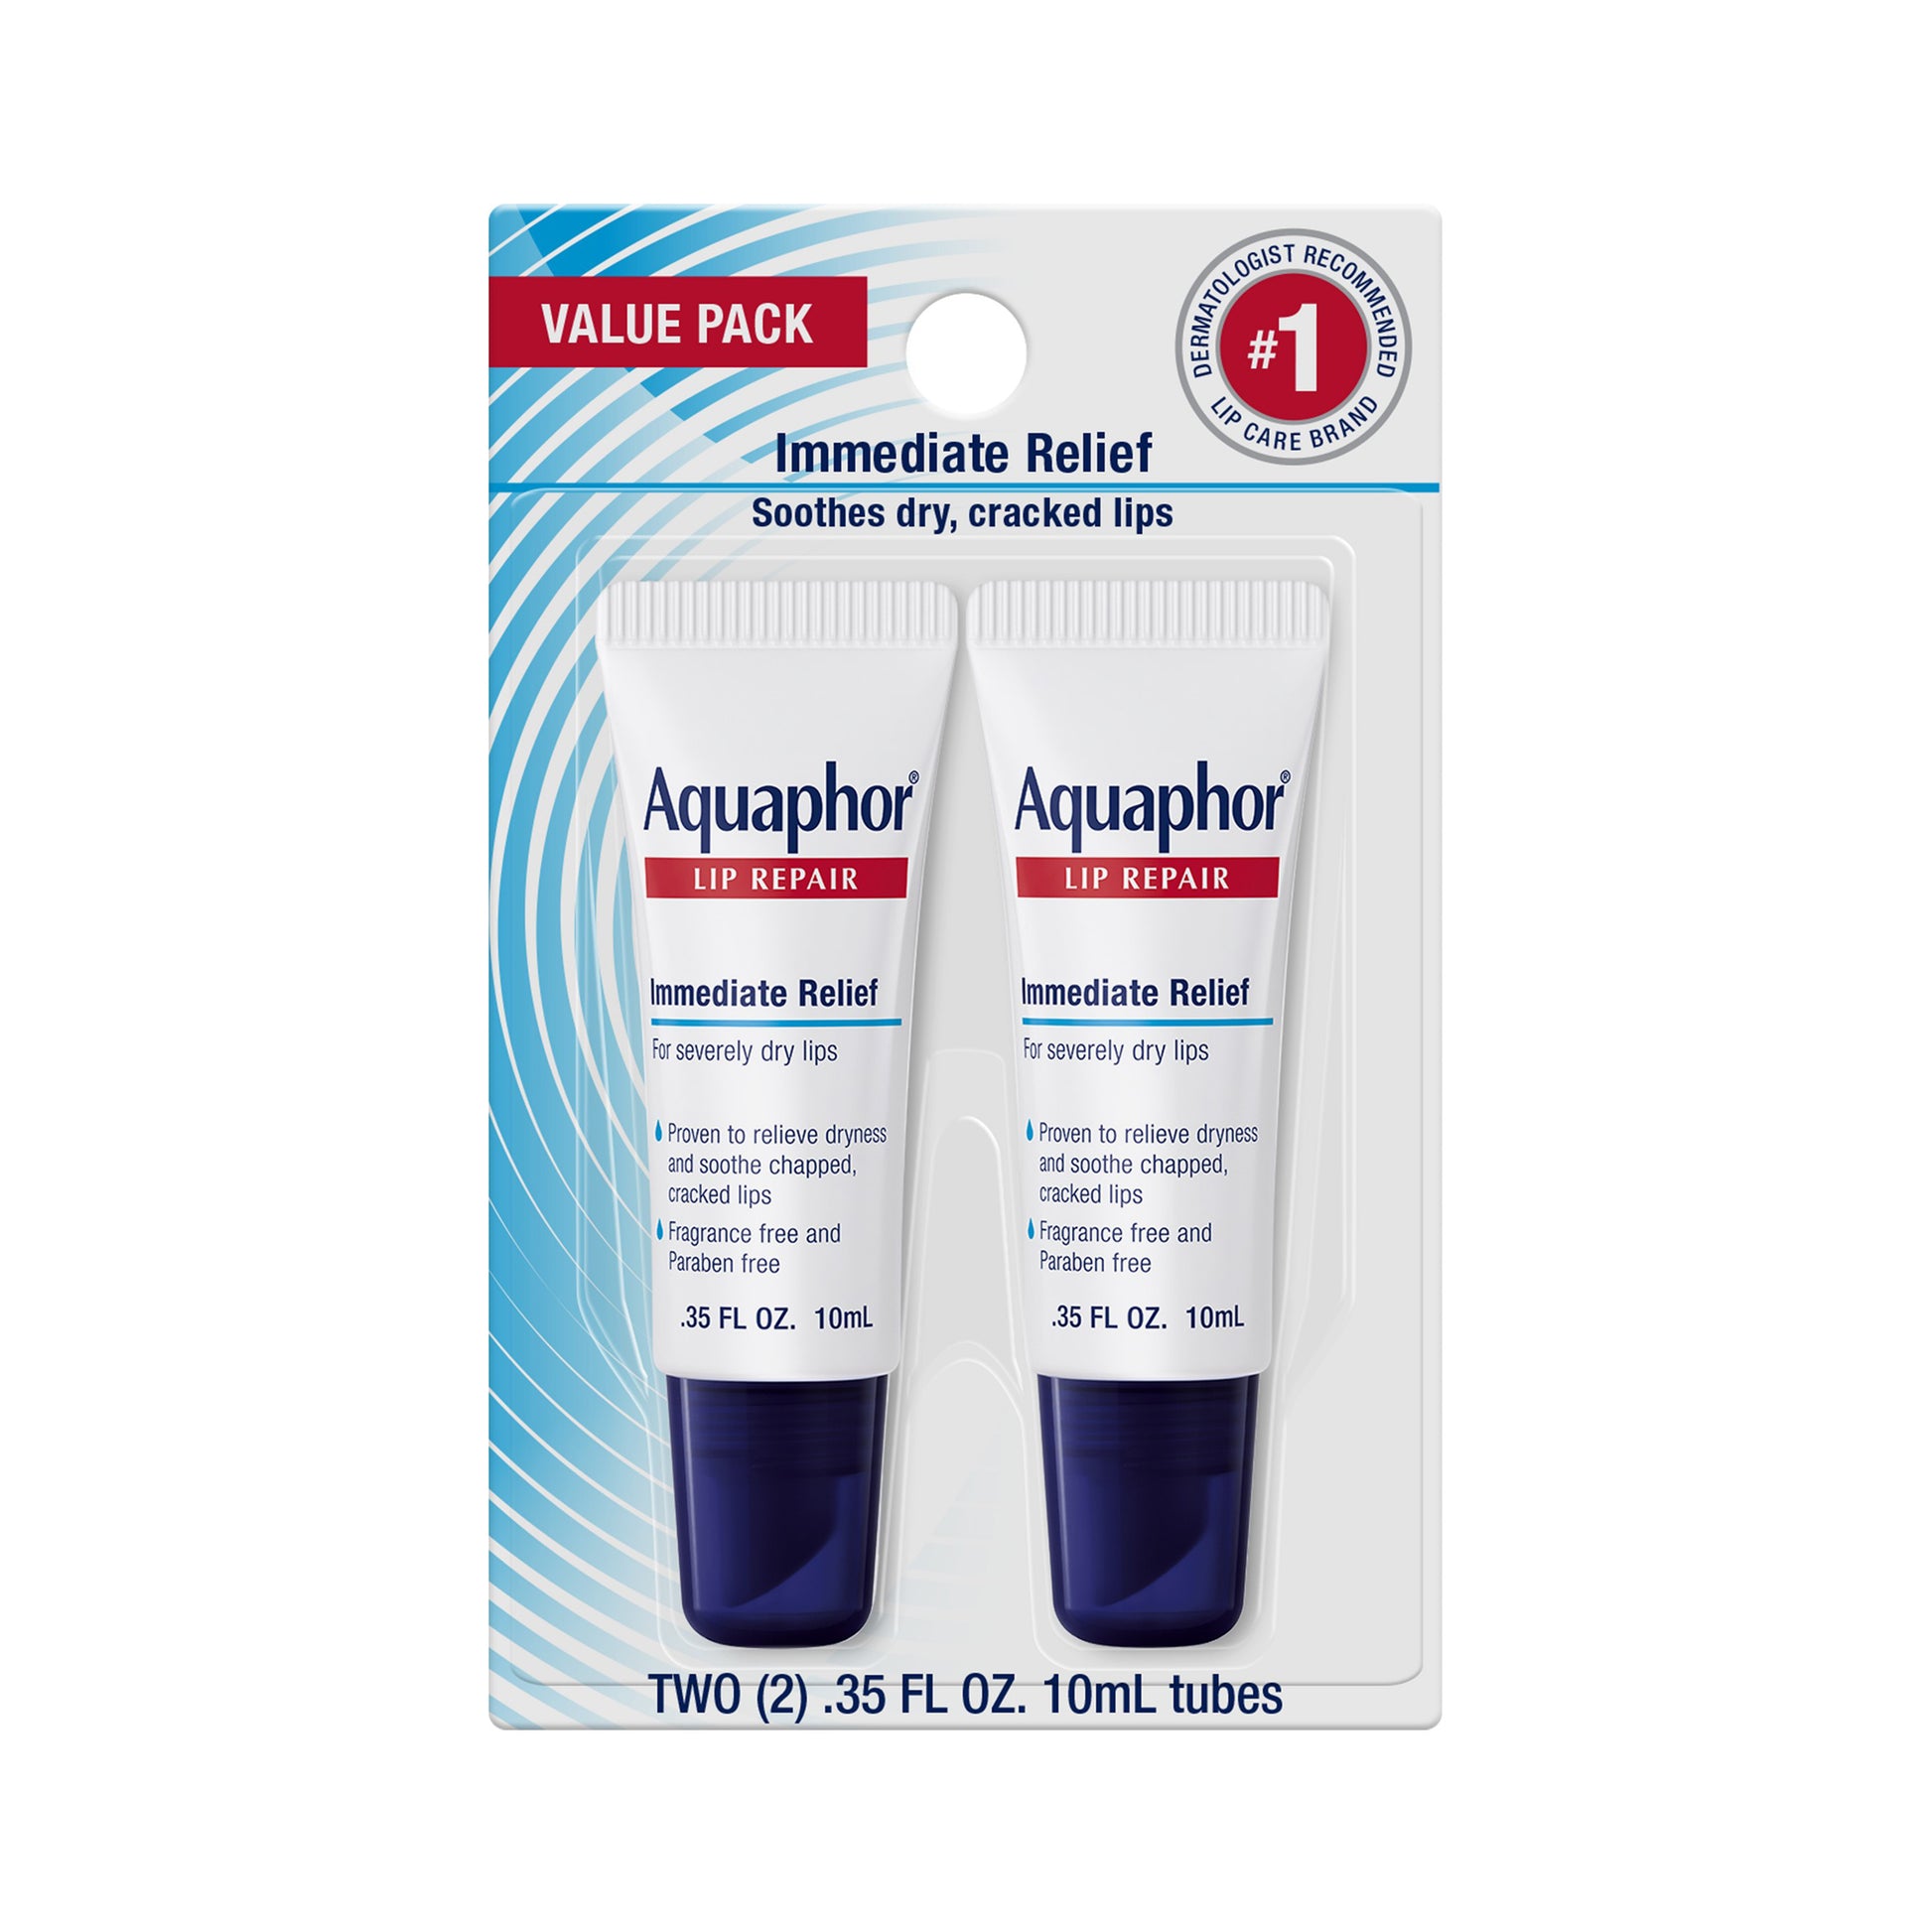 Aquaphor Lip Repair Value Pack Immediate Relief Fragrance Free